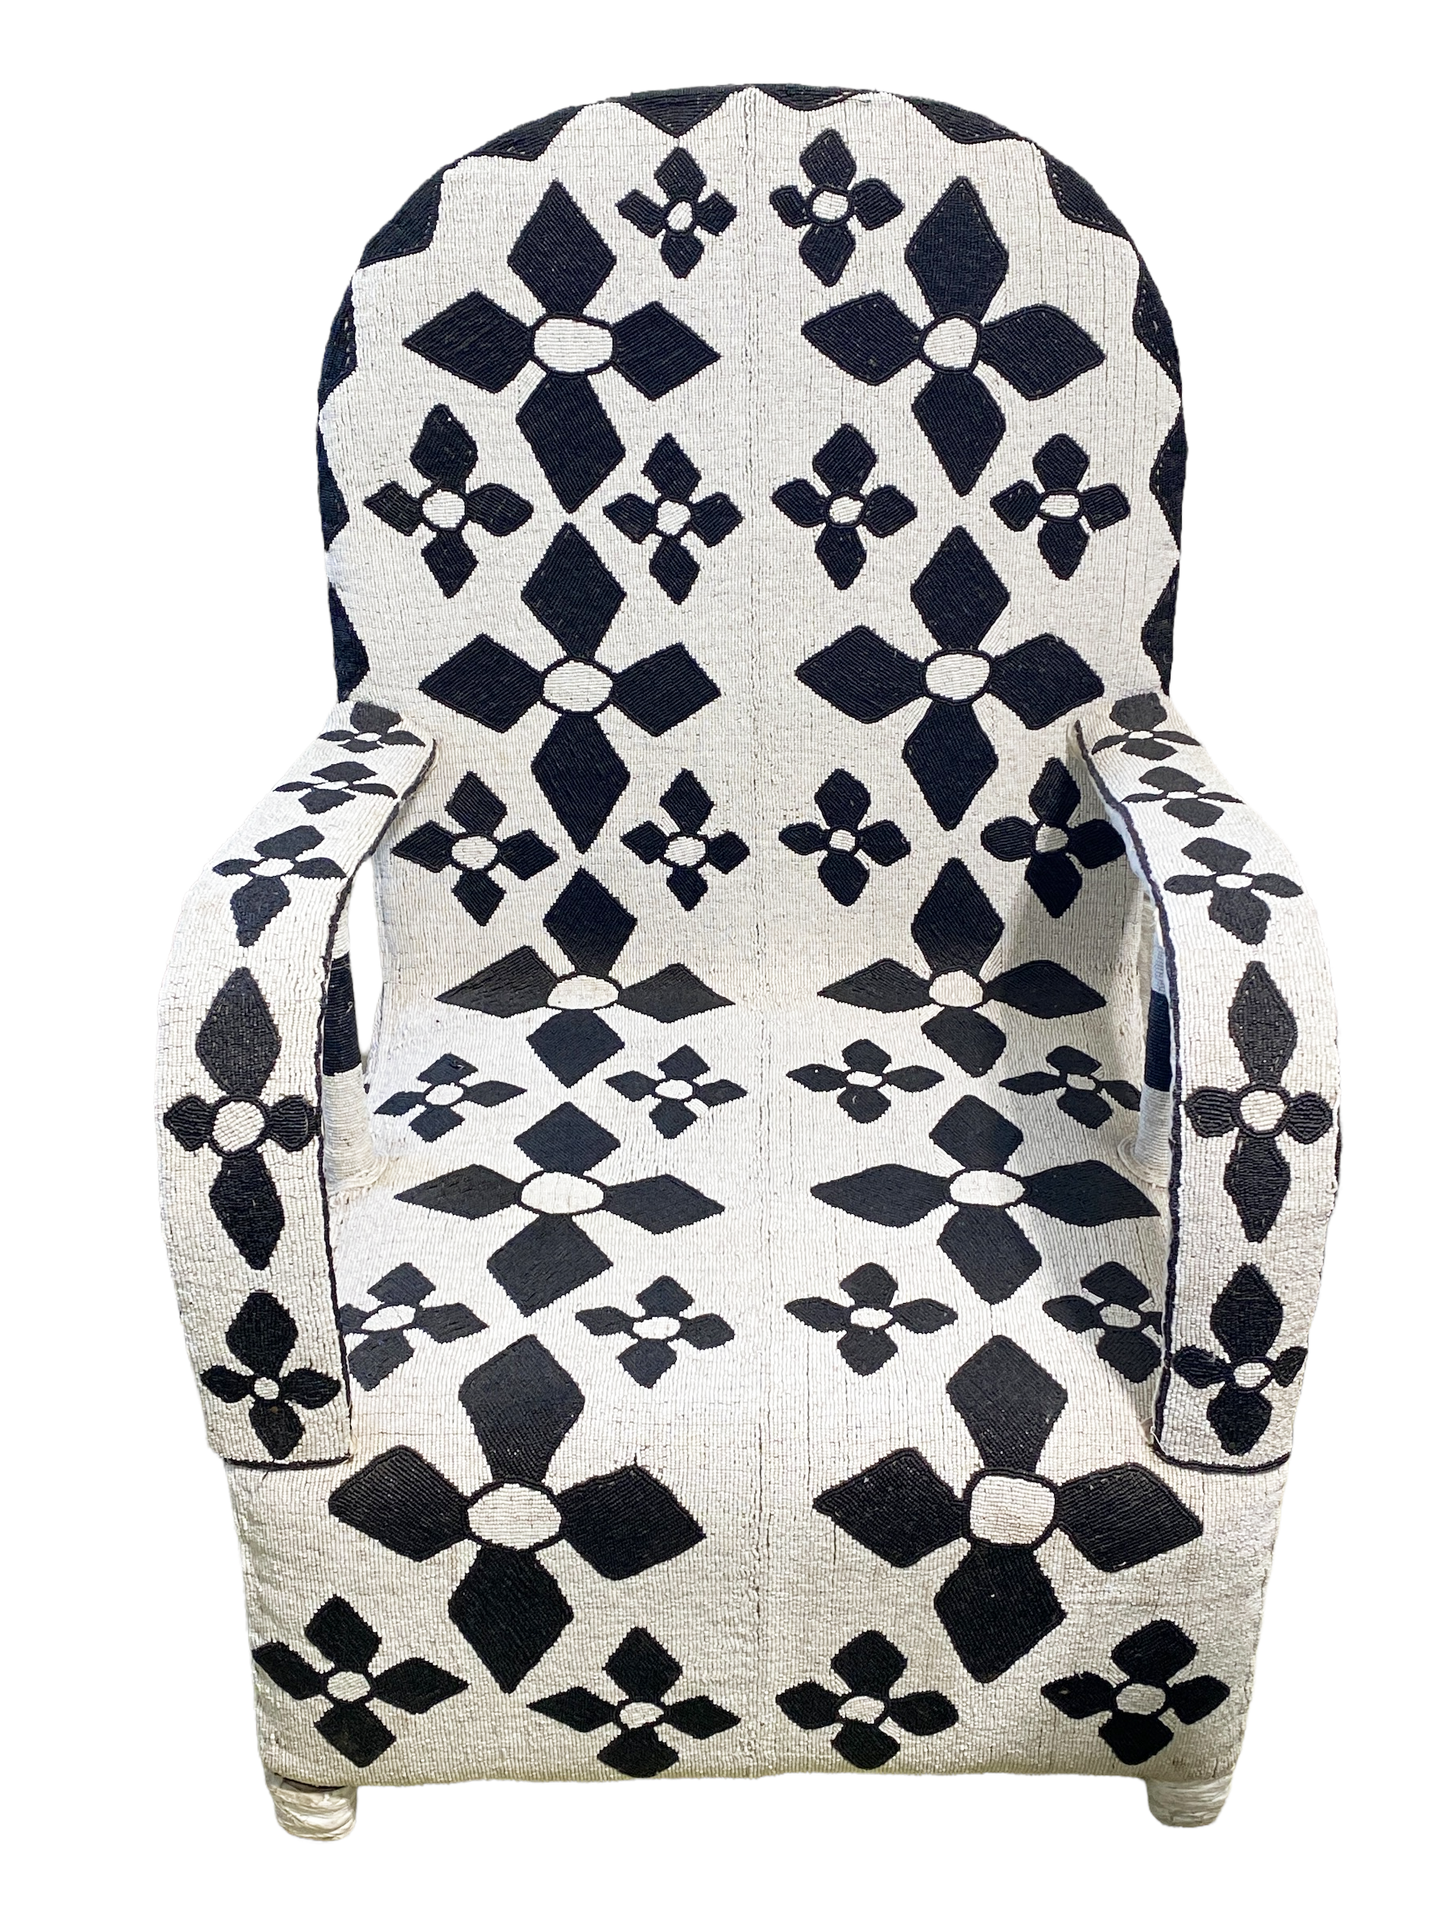 #1934 African Nobility Nigerian Yoruba Black& White Beaded Chair